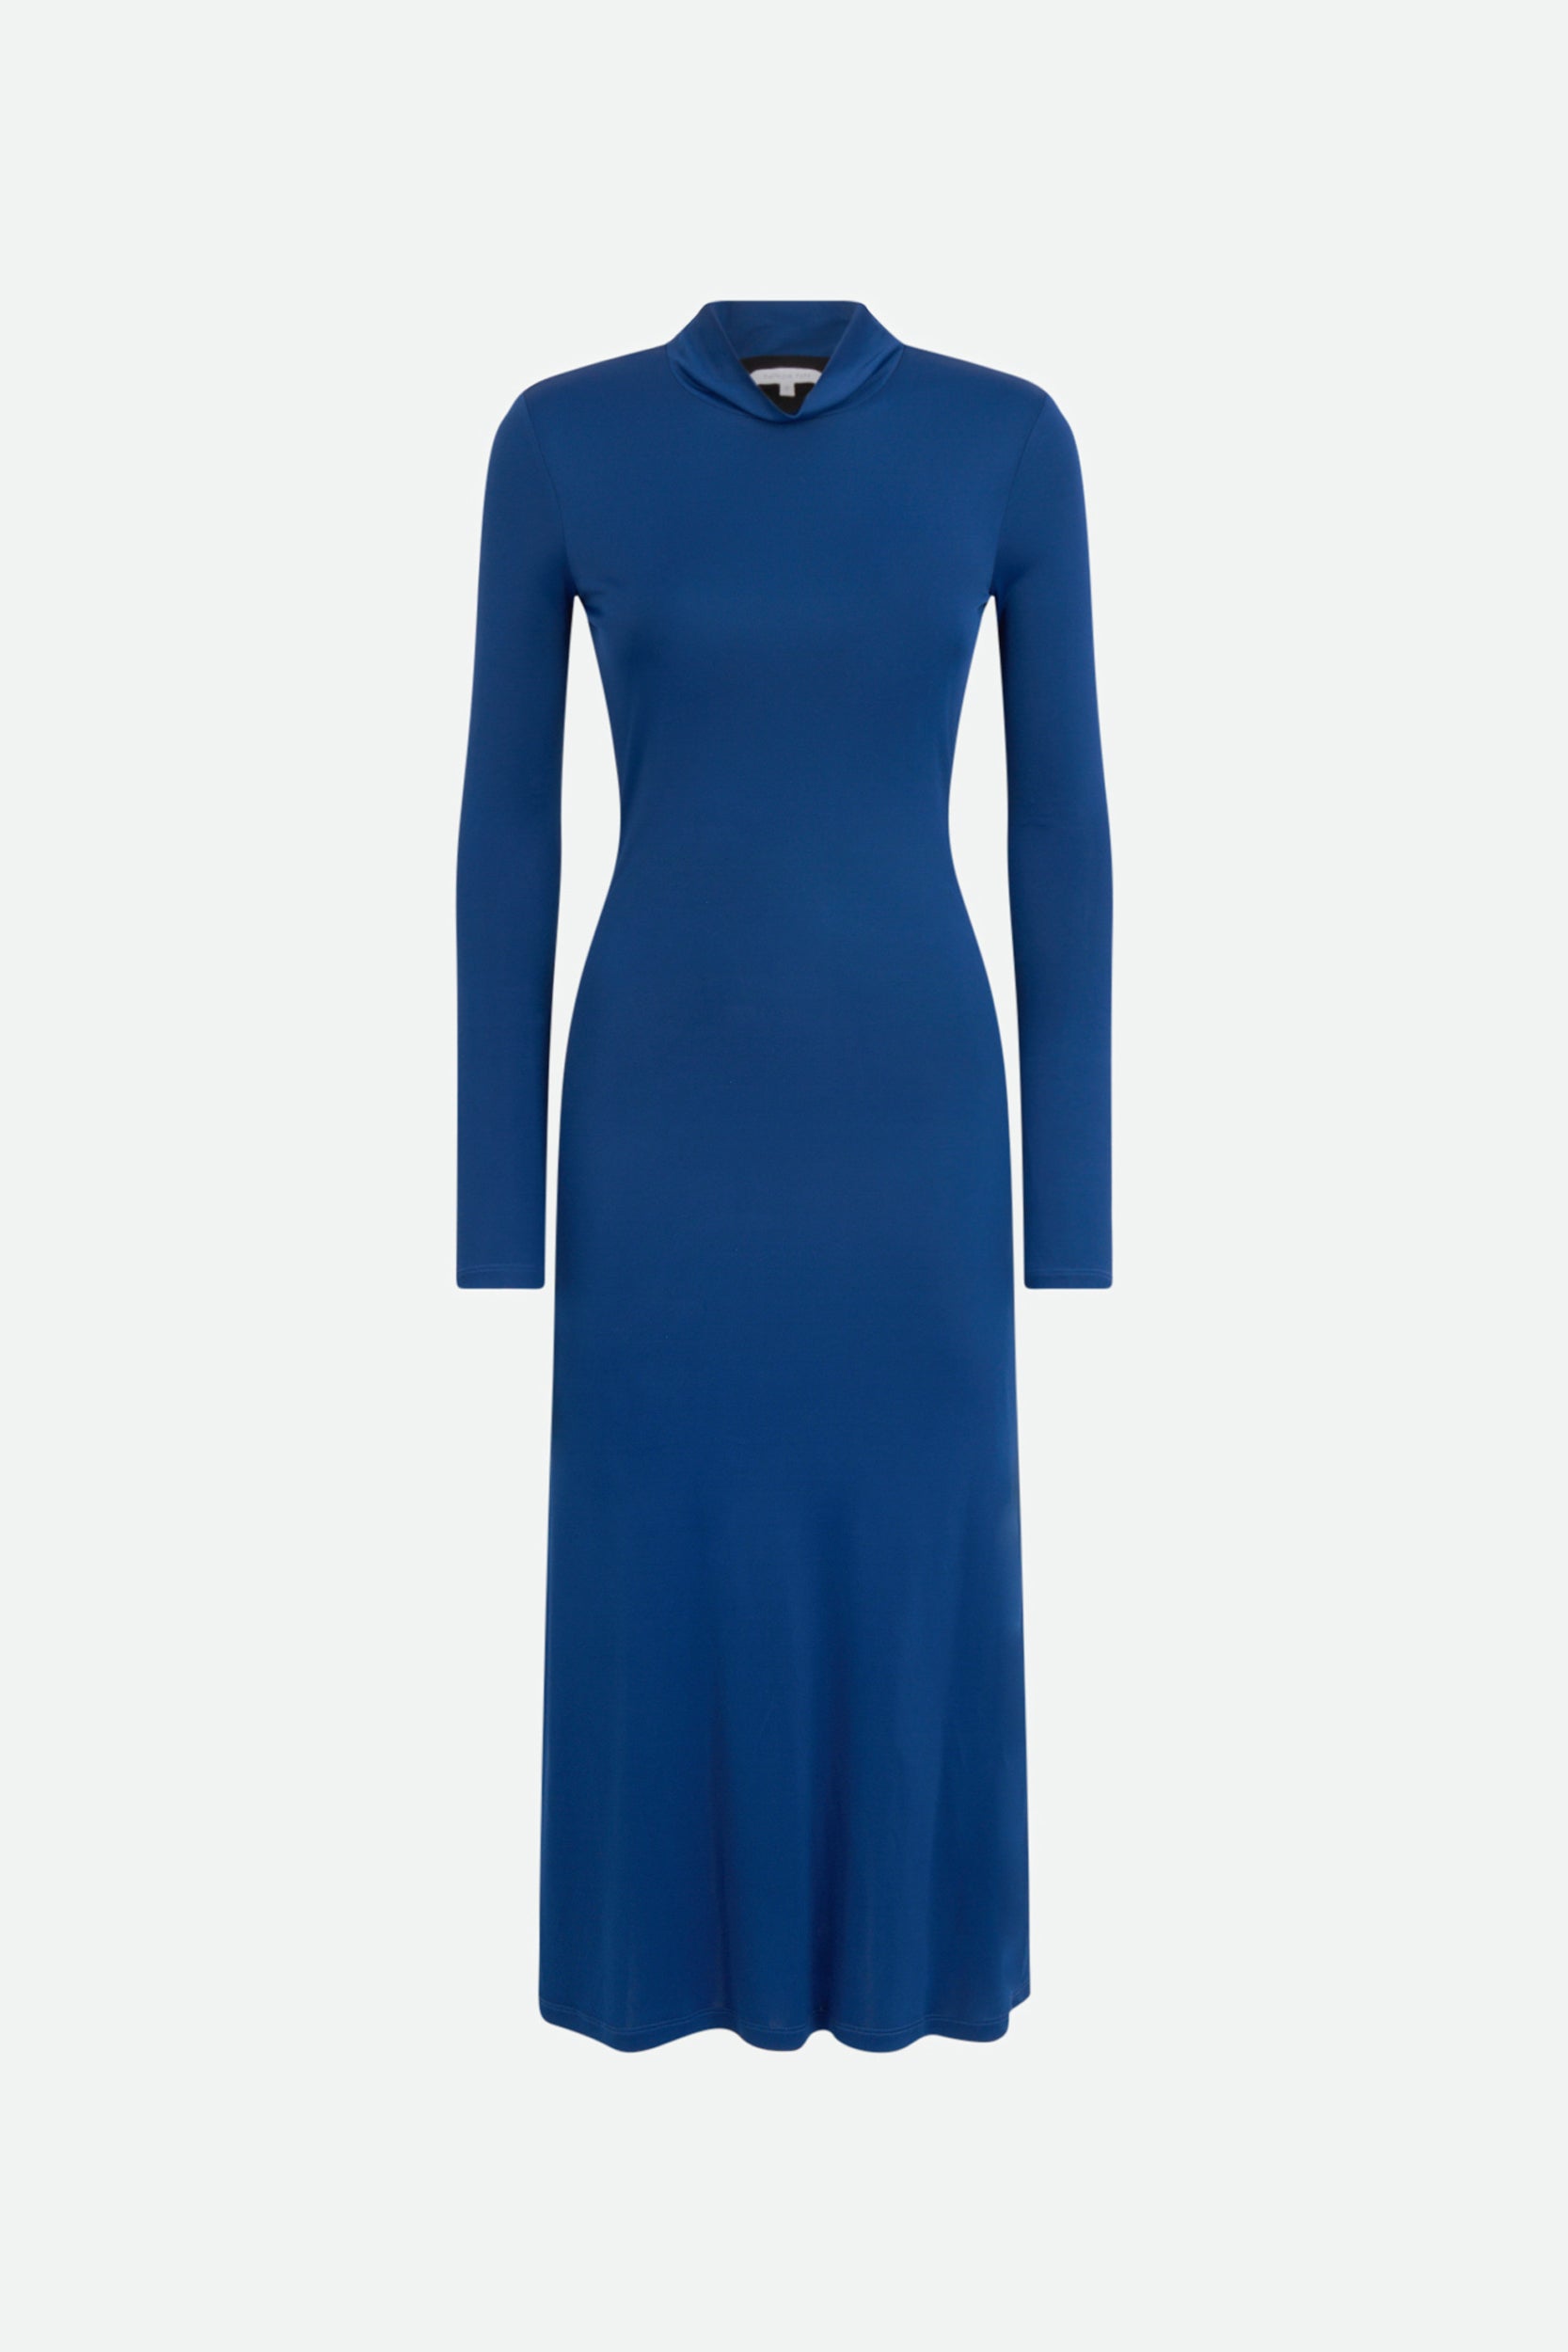 Patrizia Pepe Long Blue Dress